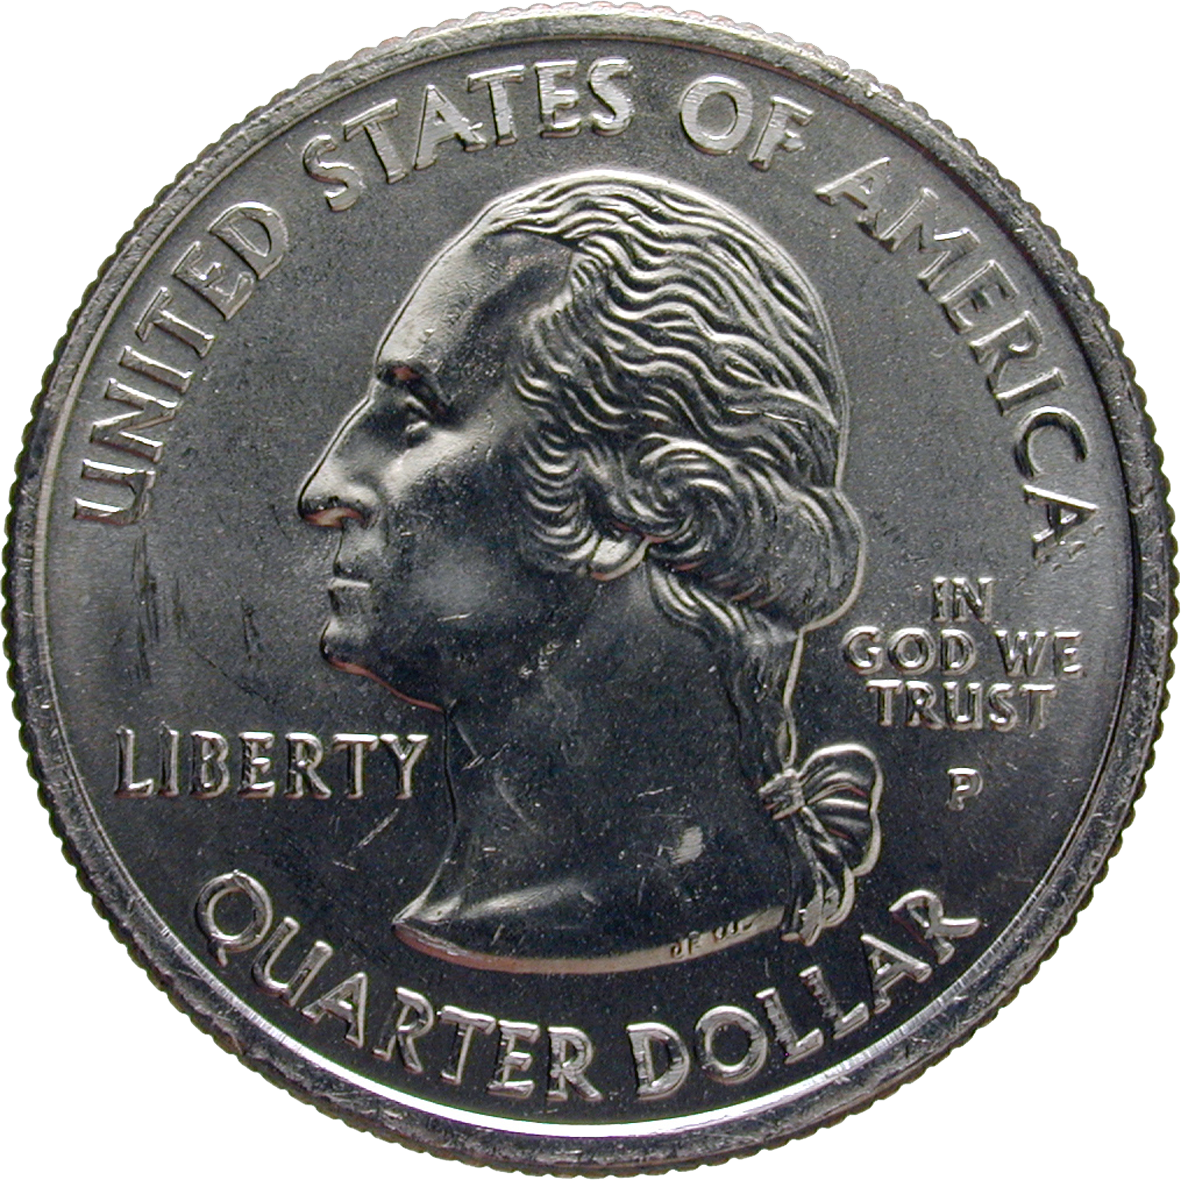 United States of America, Quarter Dollar 2007 (obverse)